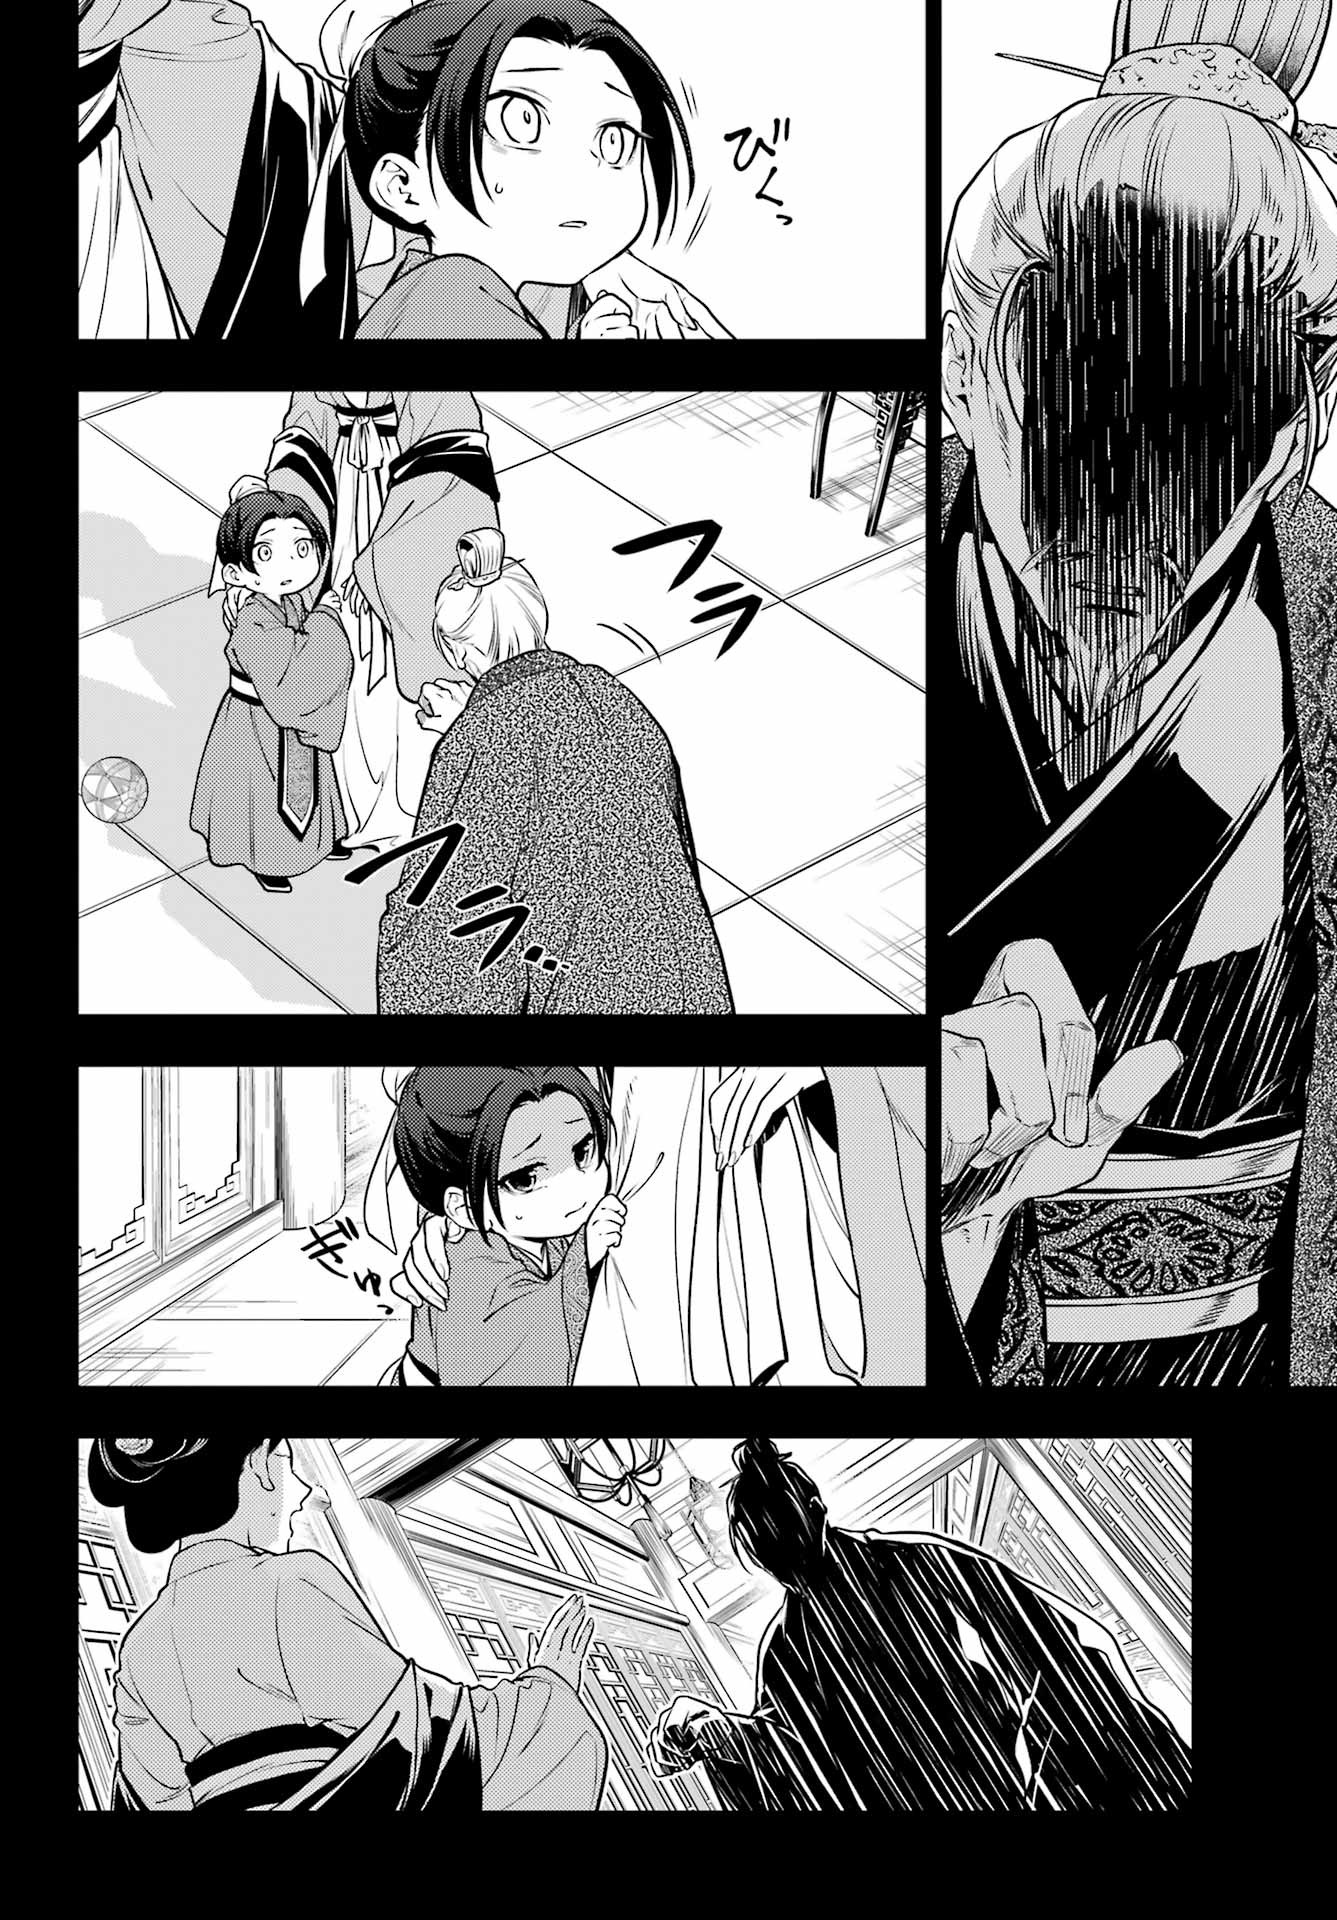 Kusuriya no Hitorigoto - Chapter 55-1 - Page 2